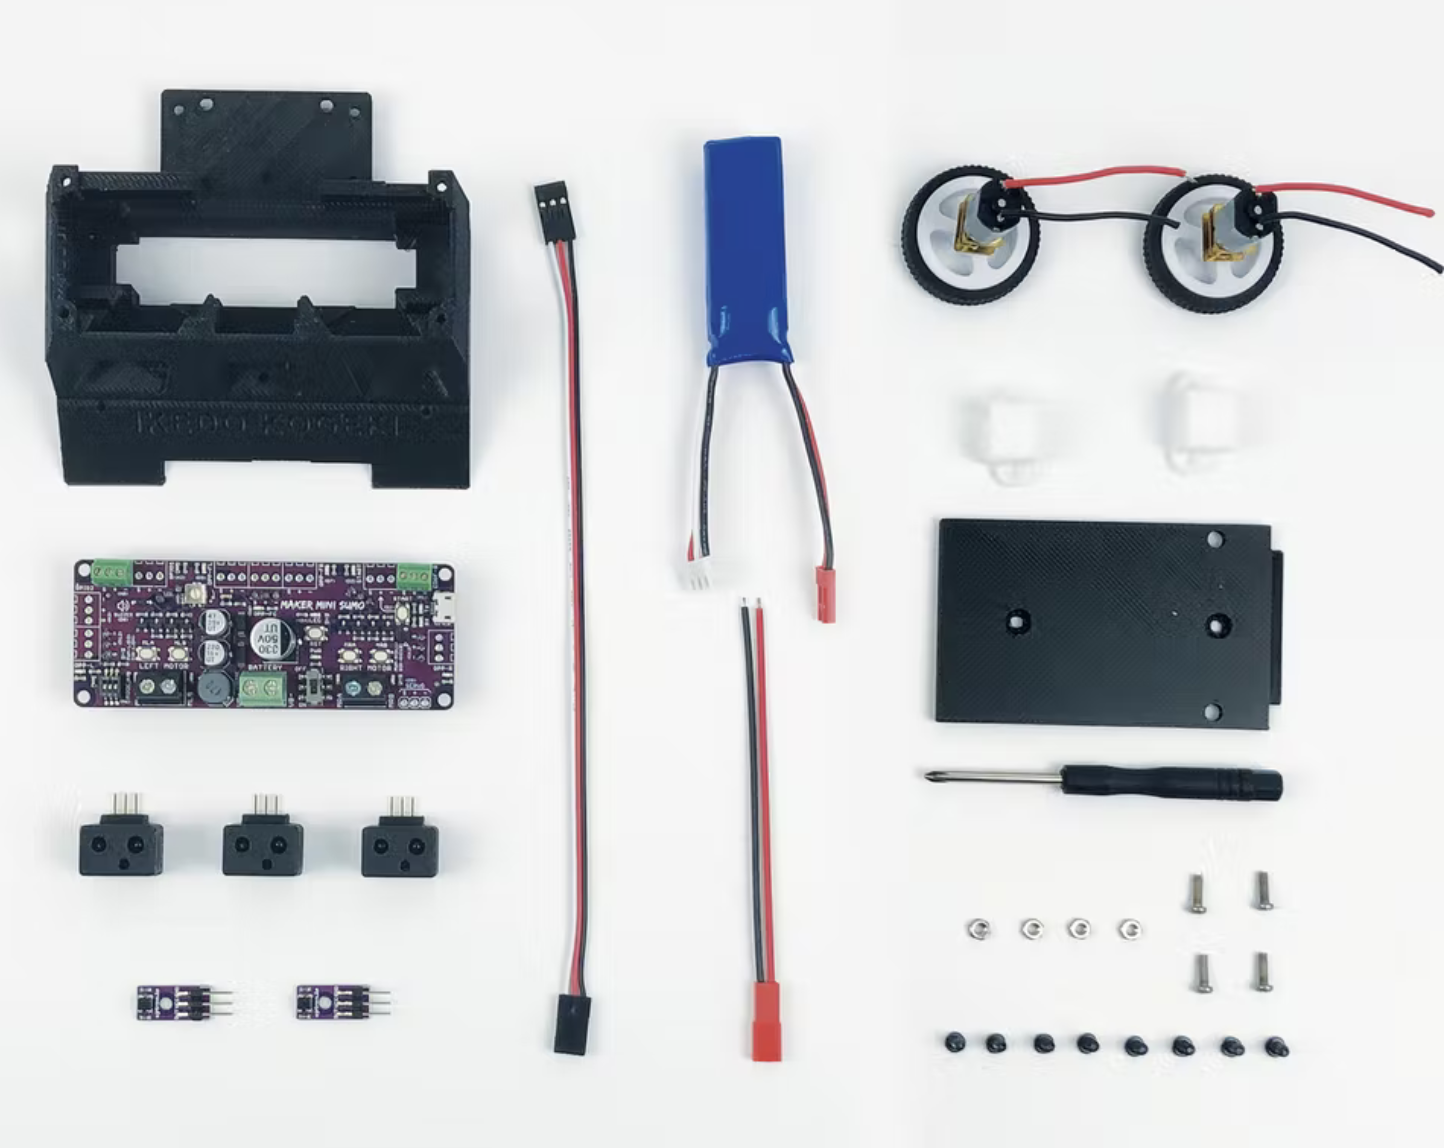 Ikedo Mini Sumo Roboter Starter Kit - Zum Vergrößern klicken